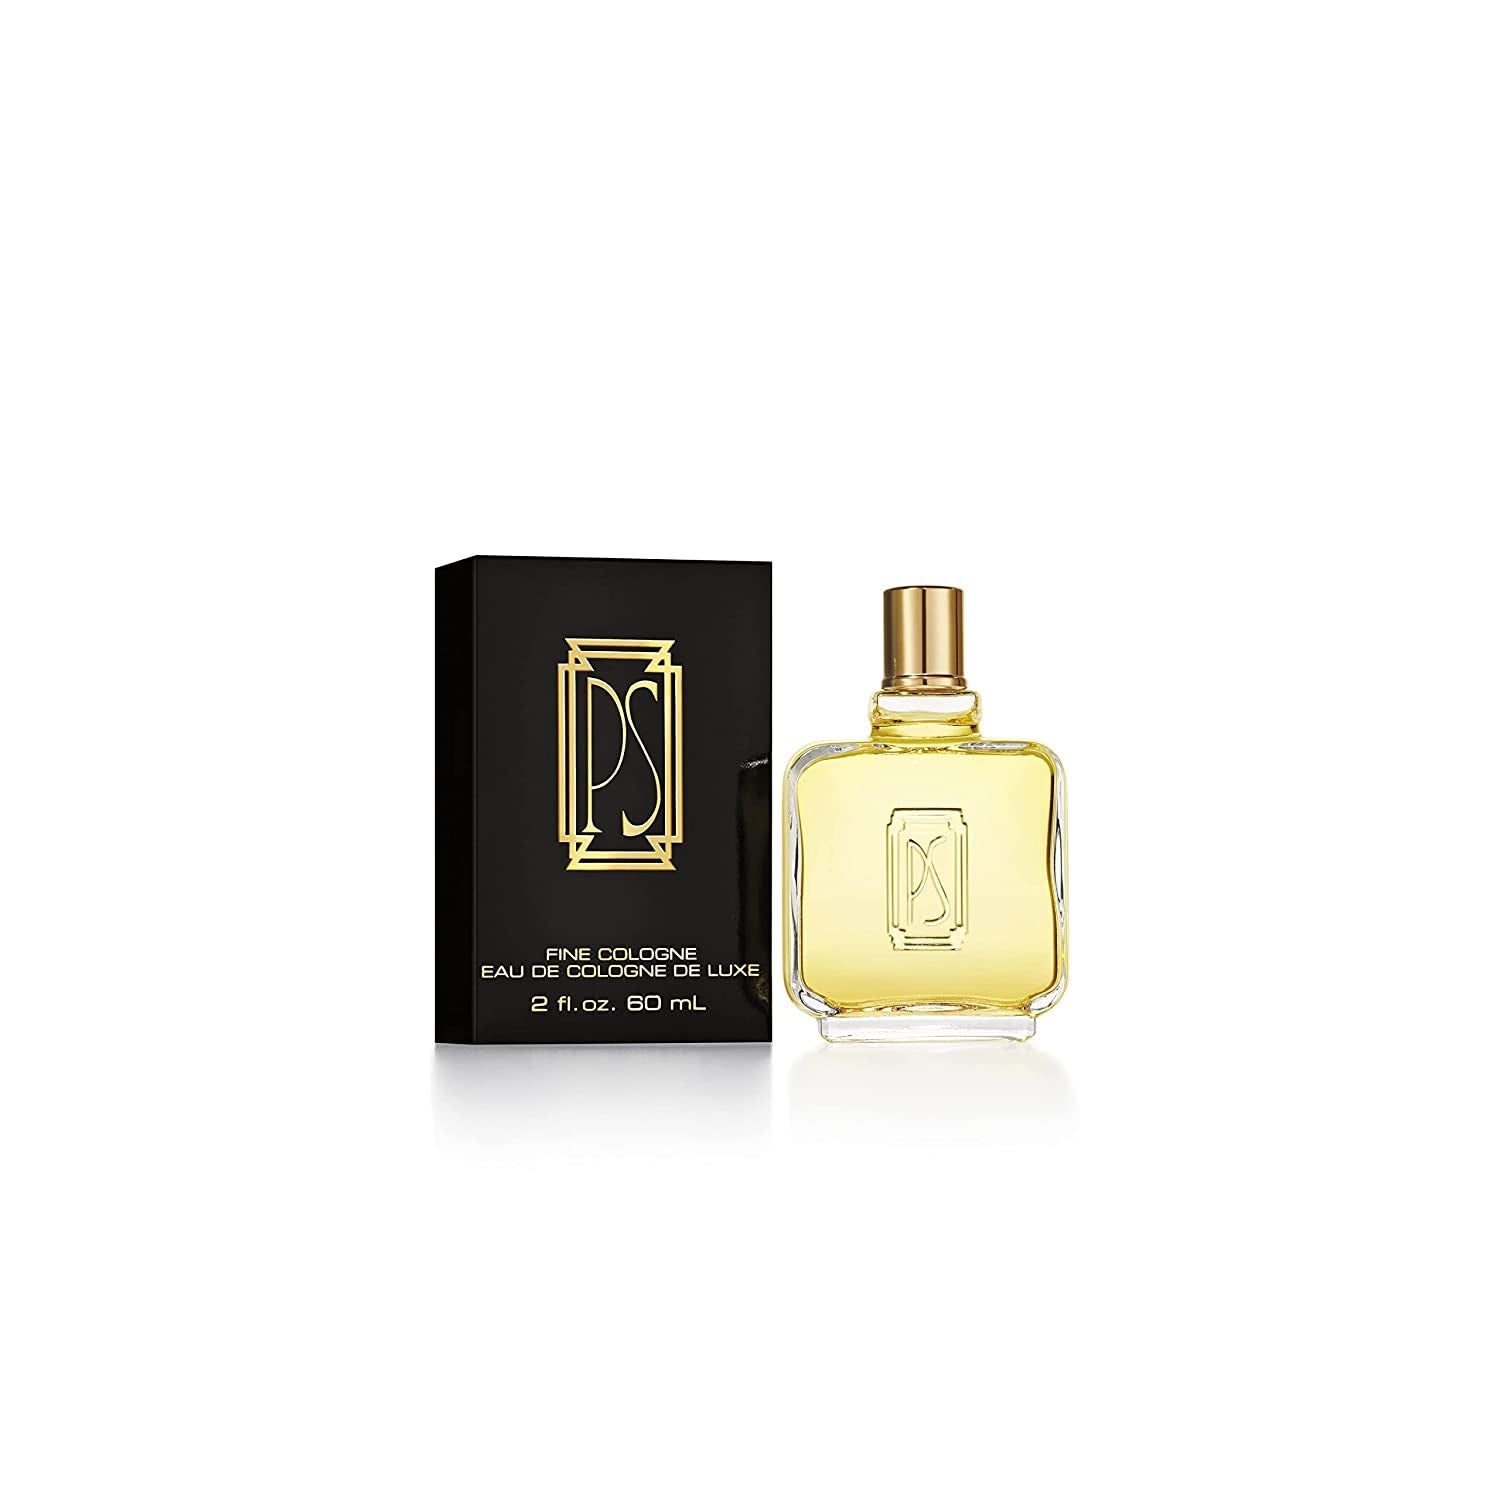 Paul Sebastian Men's Cologne Fragrance, Day or Night Scent, 2 Fl Oz